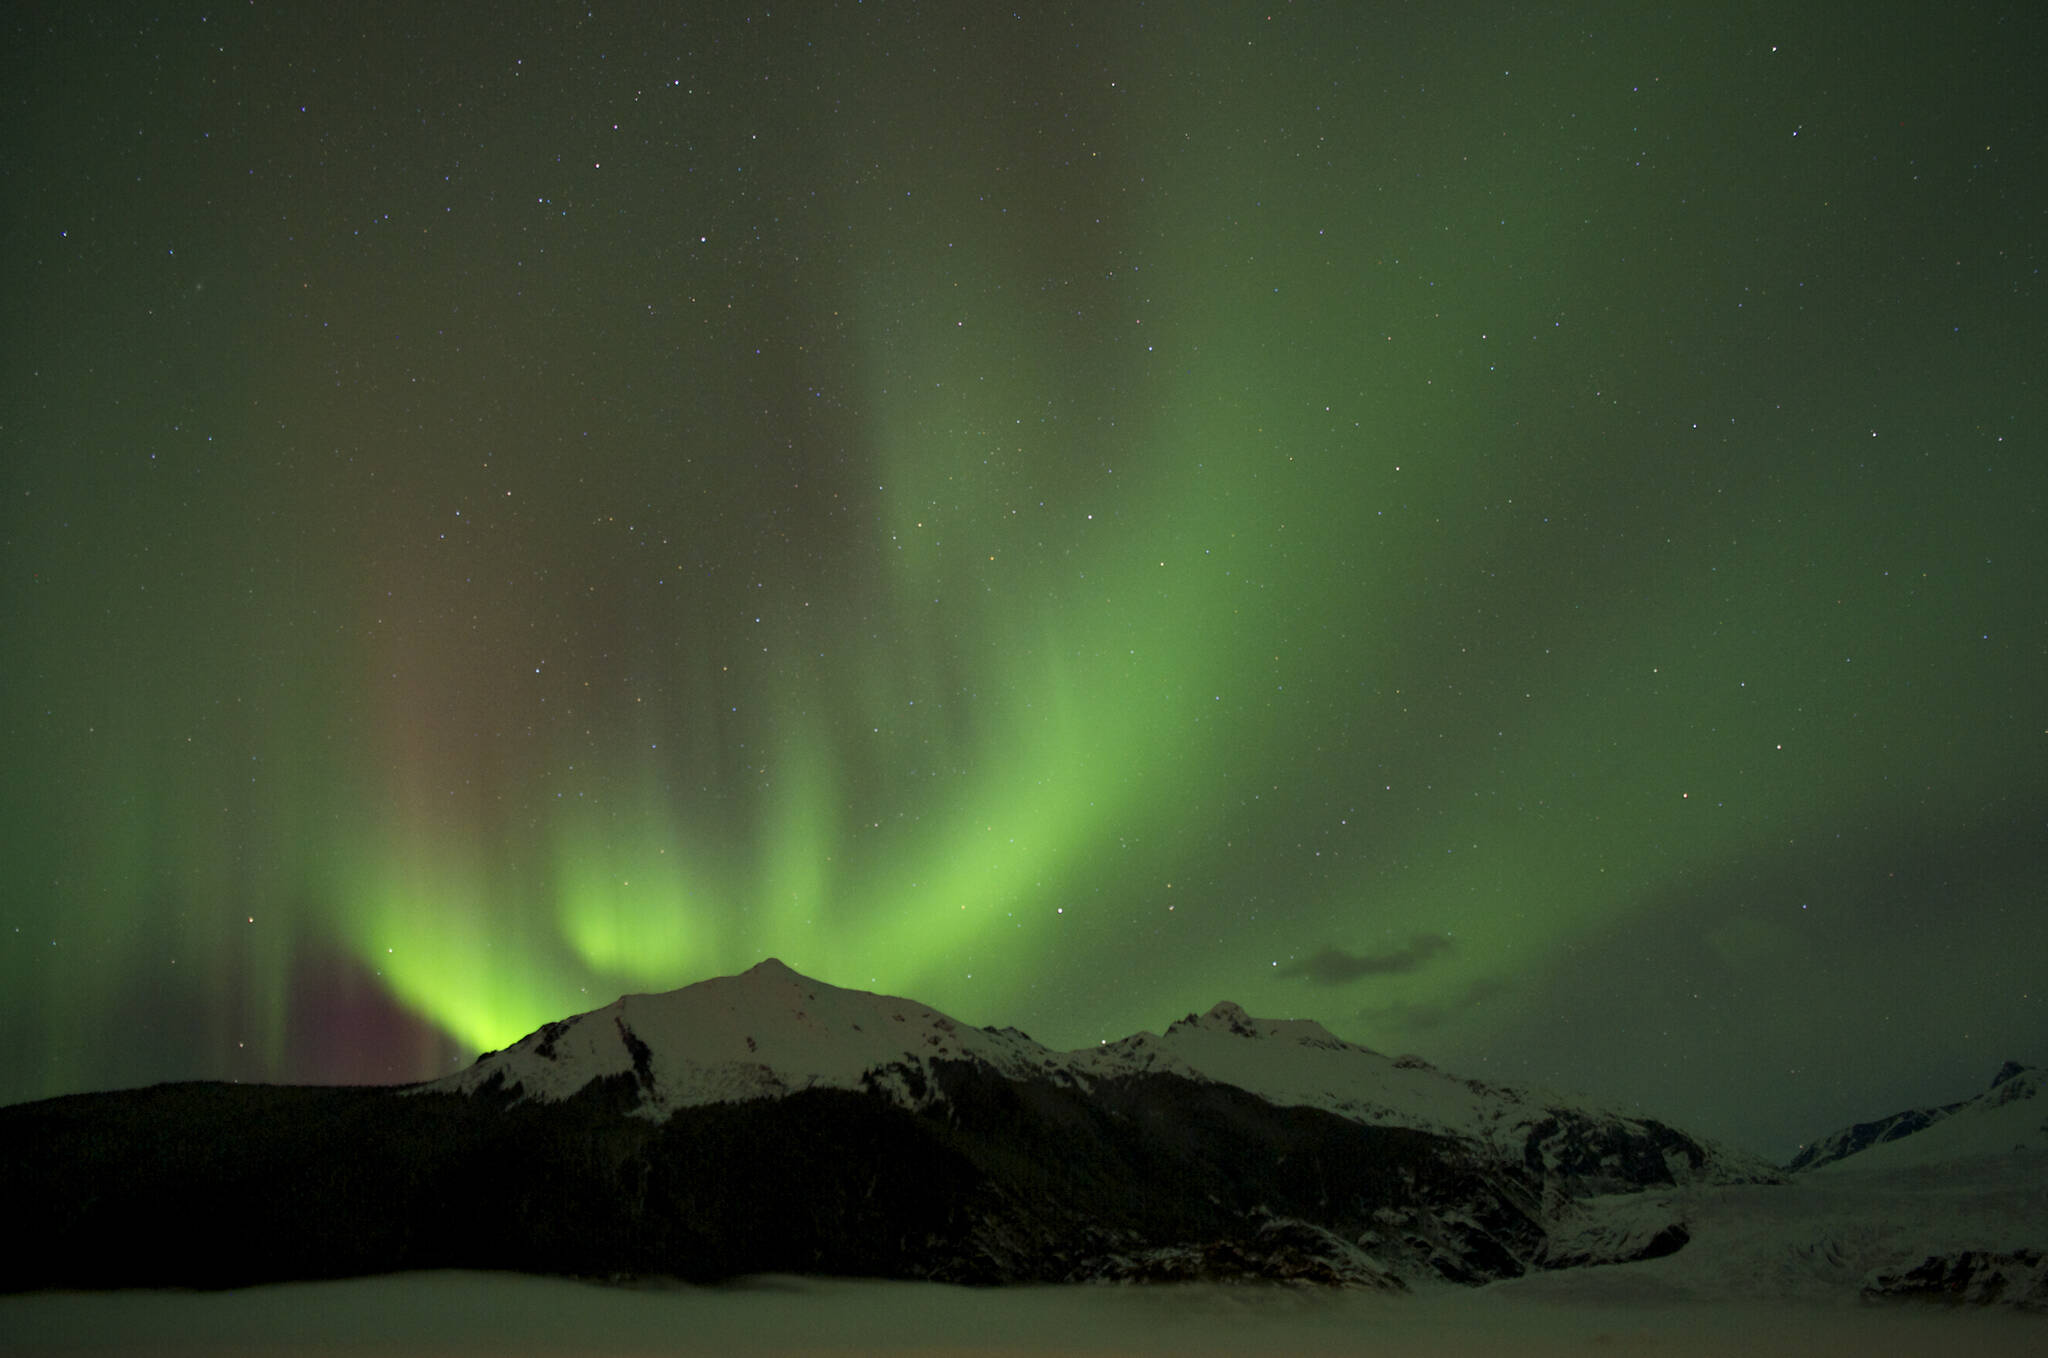 Michael Penn / Juneau Empire File
The Aurora Borealis glows over the Mendenhall Glacier in 2014.